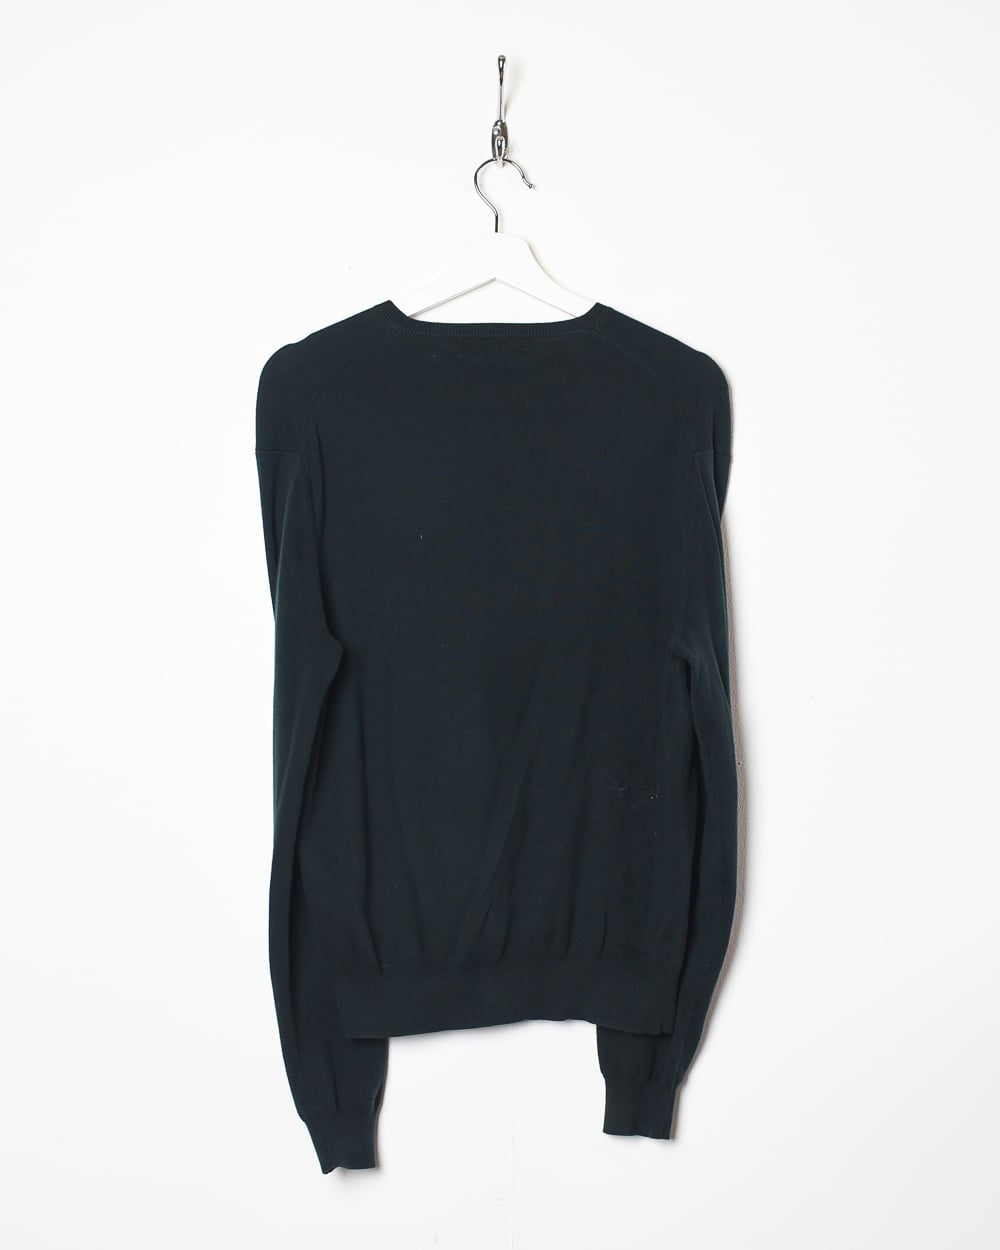 Black Polo Ralph Lauren Sweatshirt - Small